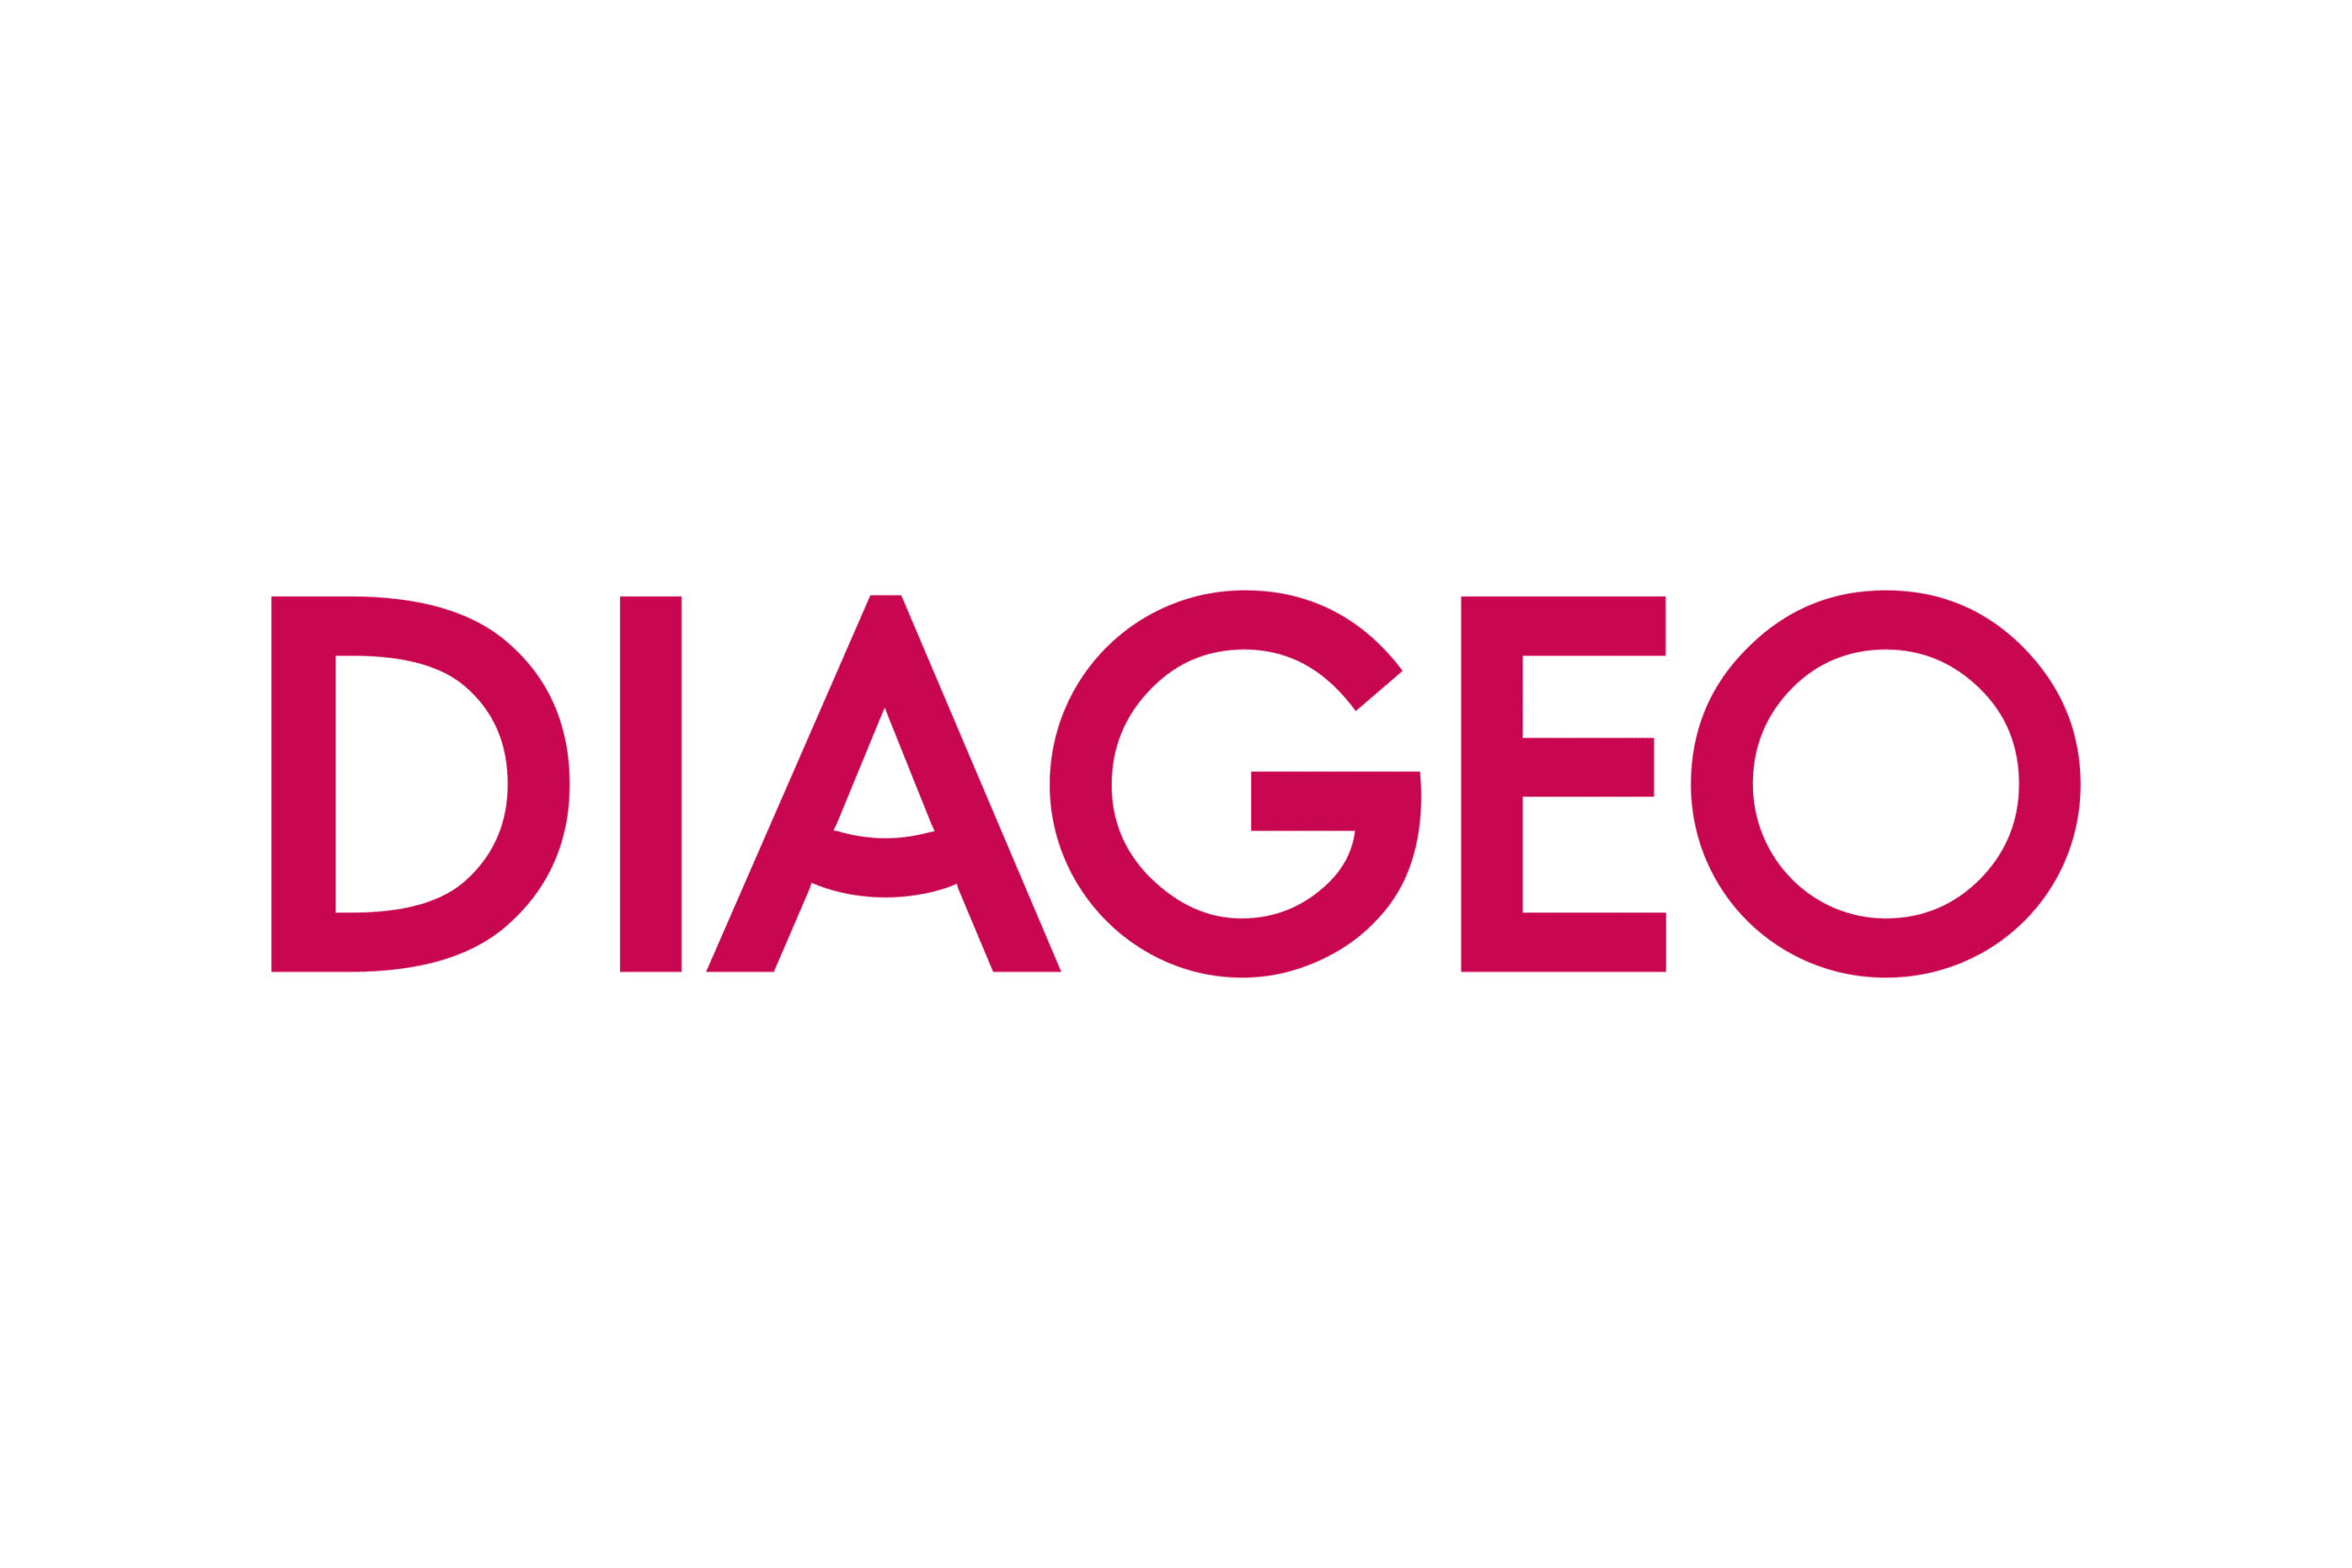 diageo-logo-2071721-2